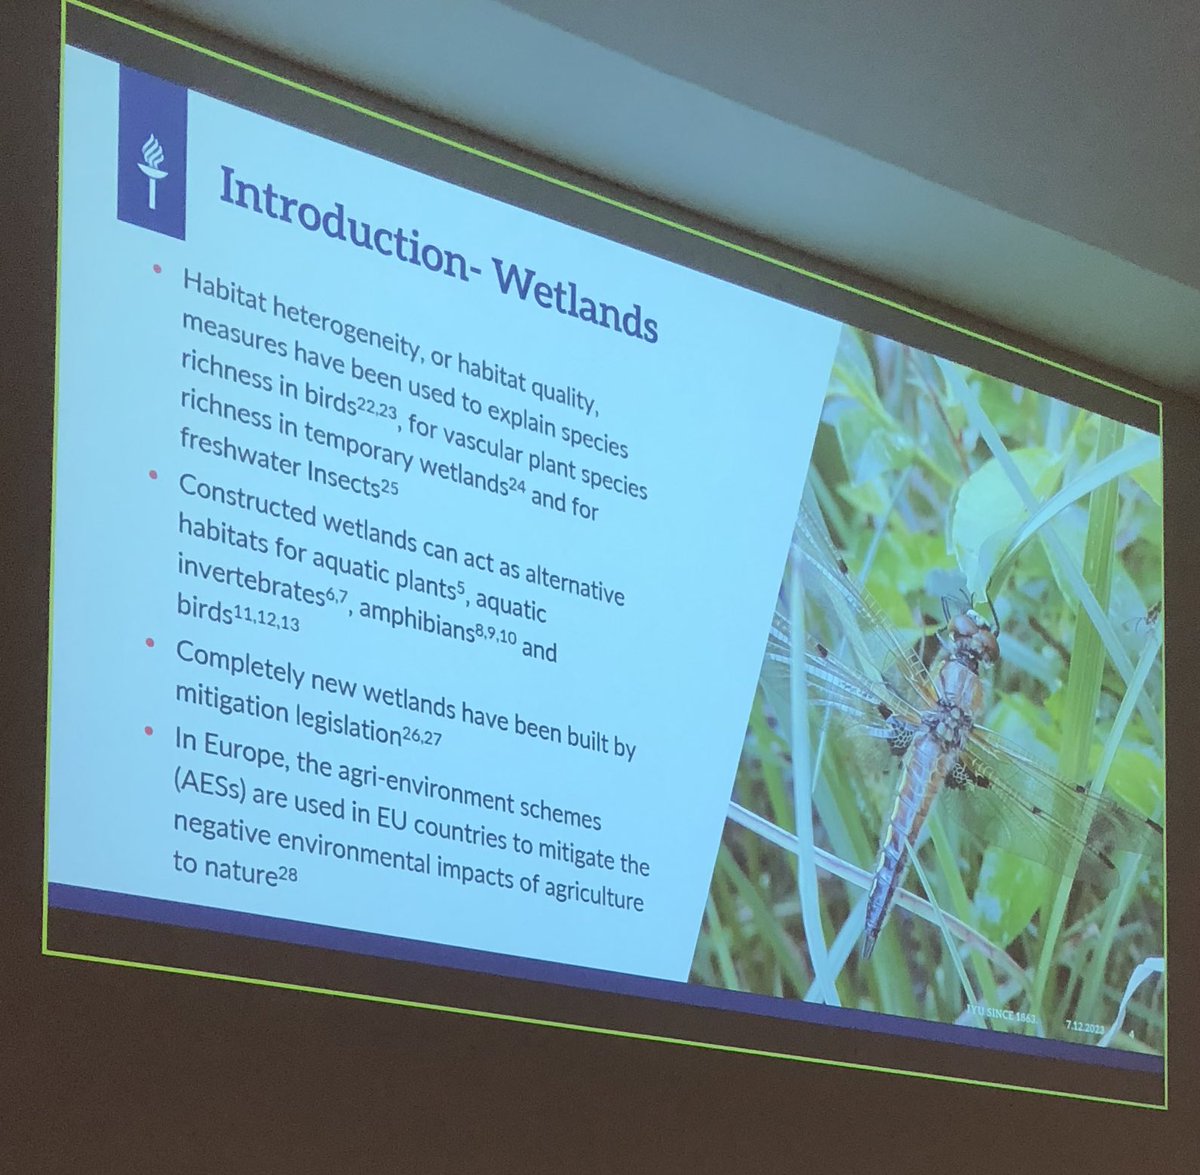 Today @jyuscience biology departmental seminar @helleilona presents her really interesting and relevant work on constructed wetlands. @NesslingSaatio